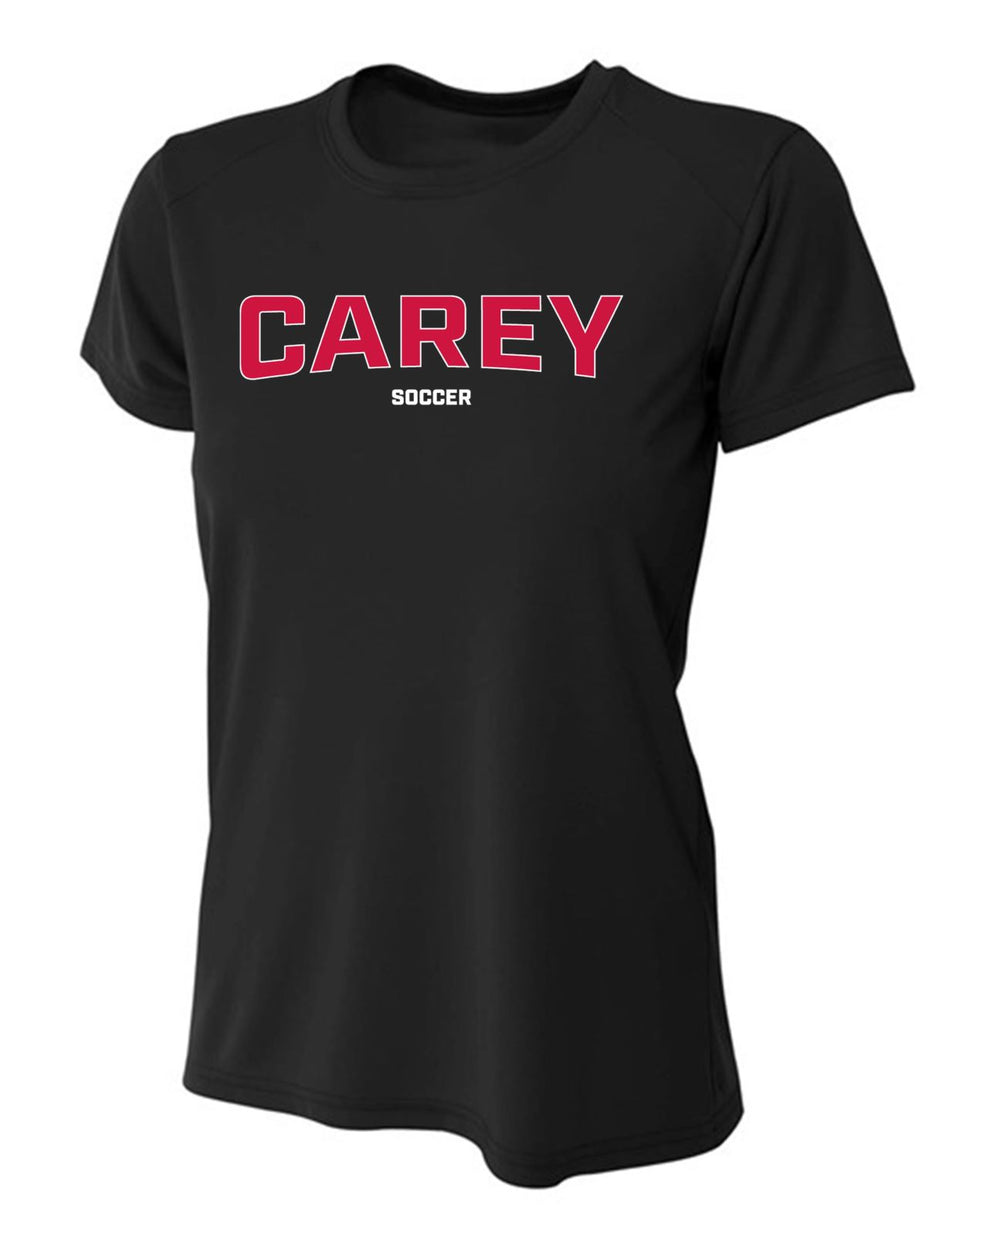 WCU Soccer Women's Short-Sleeve Performance Shirt WCU Soccer Black CAREY - Third Coast Soccer